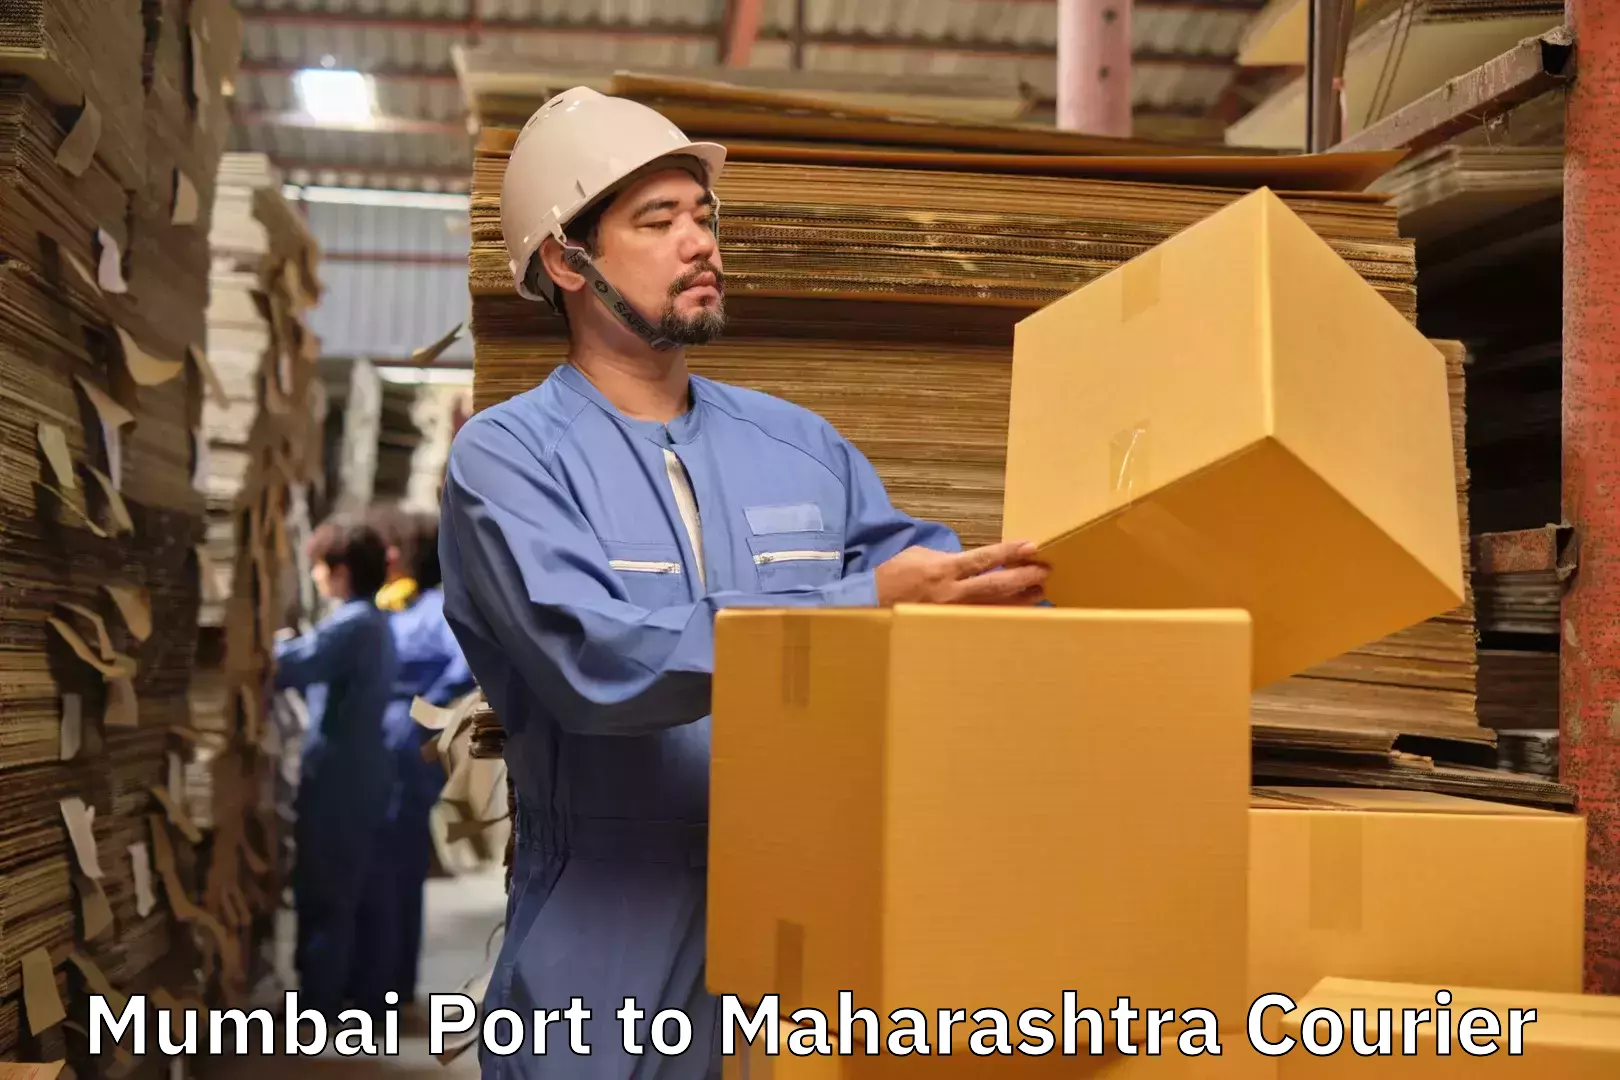 Door-to-door baggage service Mumbai Port to Mahabaleshwar